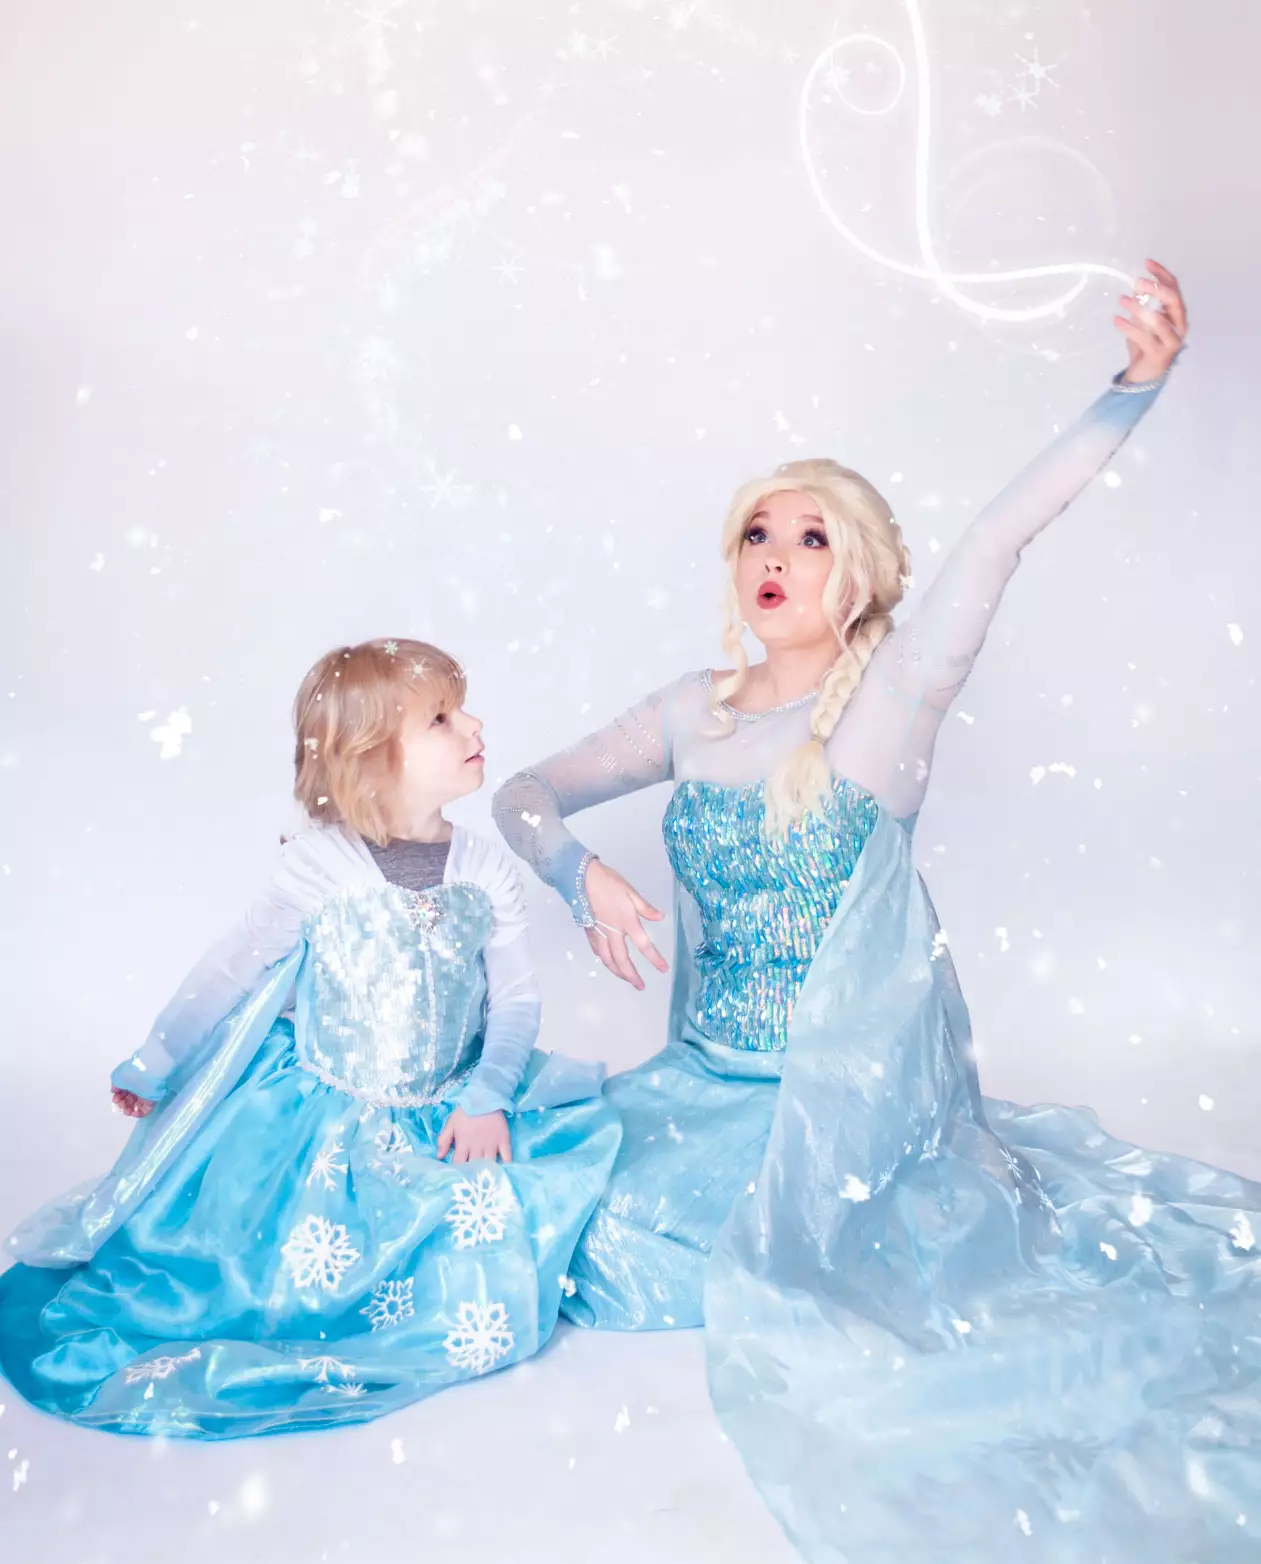 Michael and Elsa (